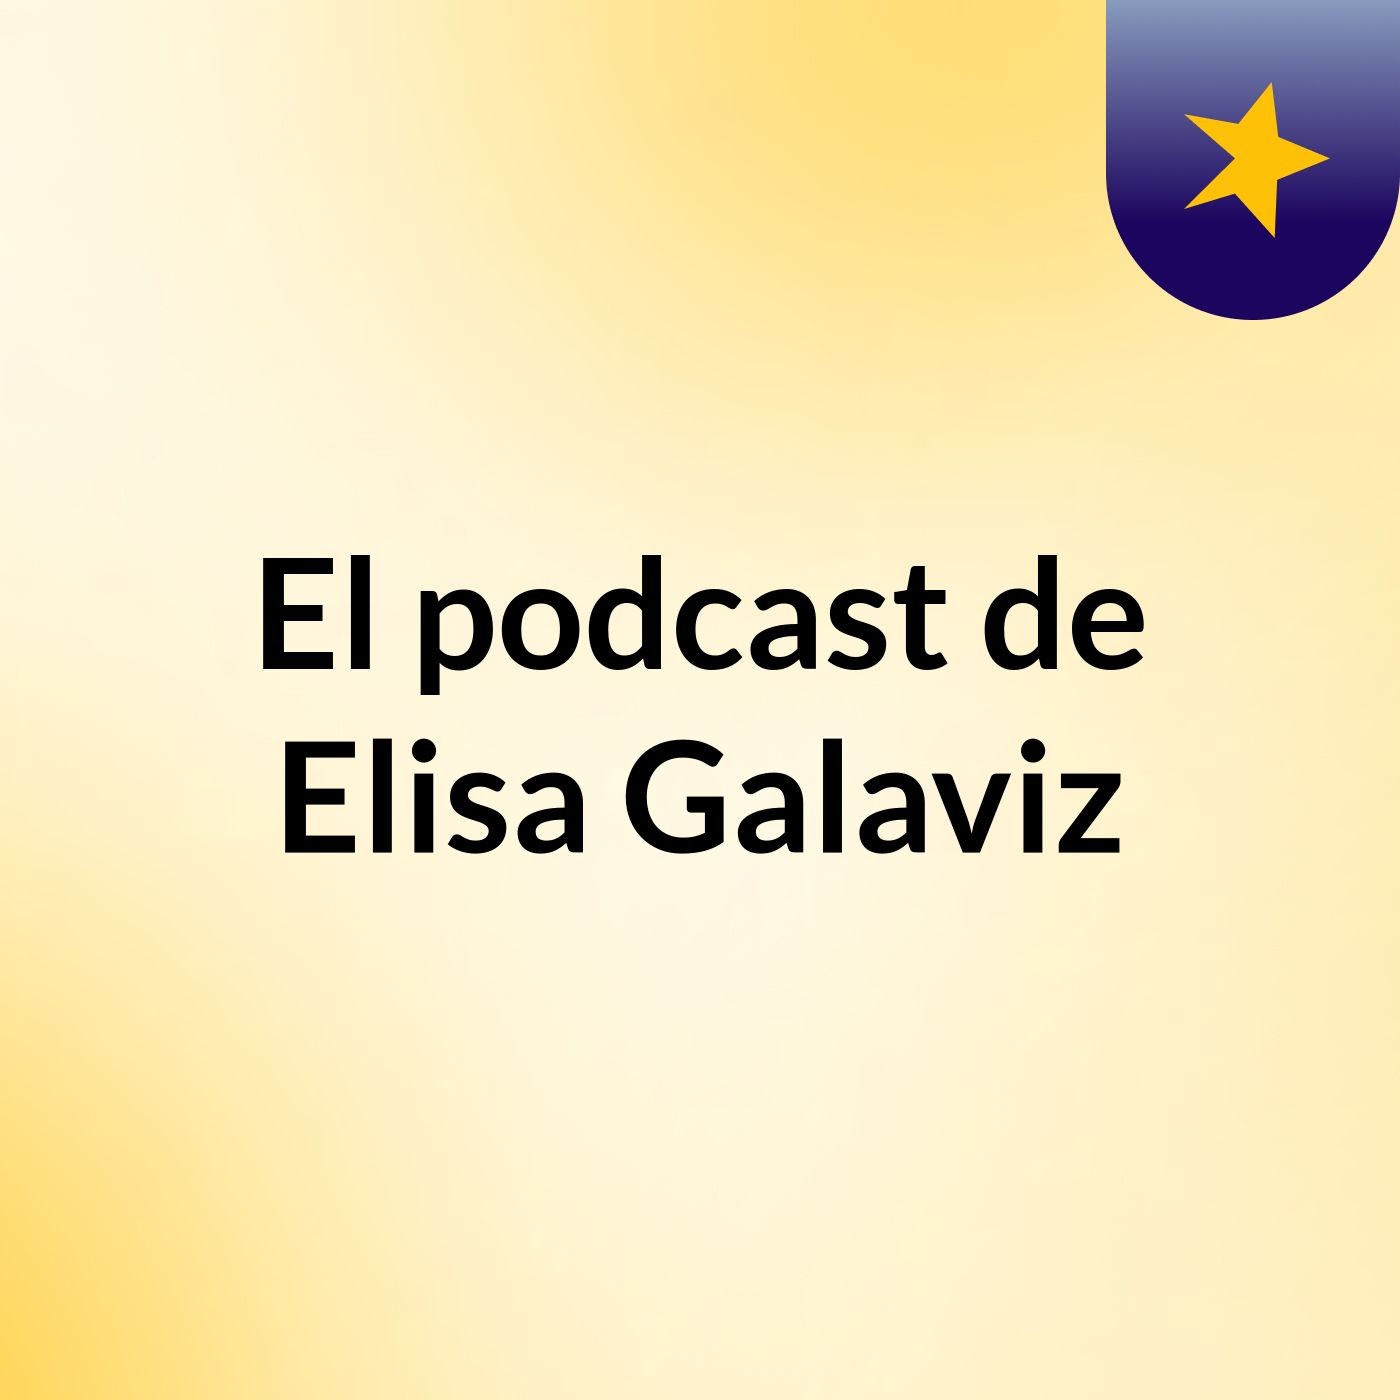 El podcast de Elisa Galaviz